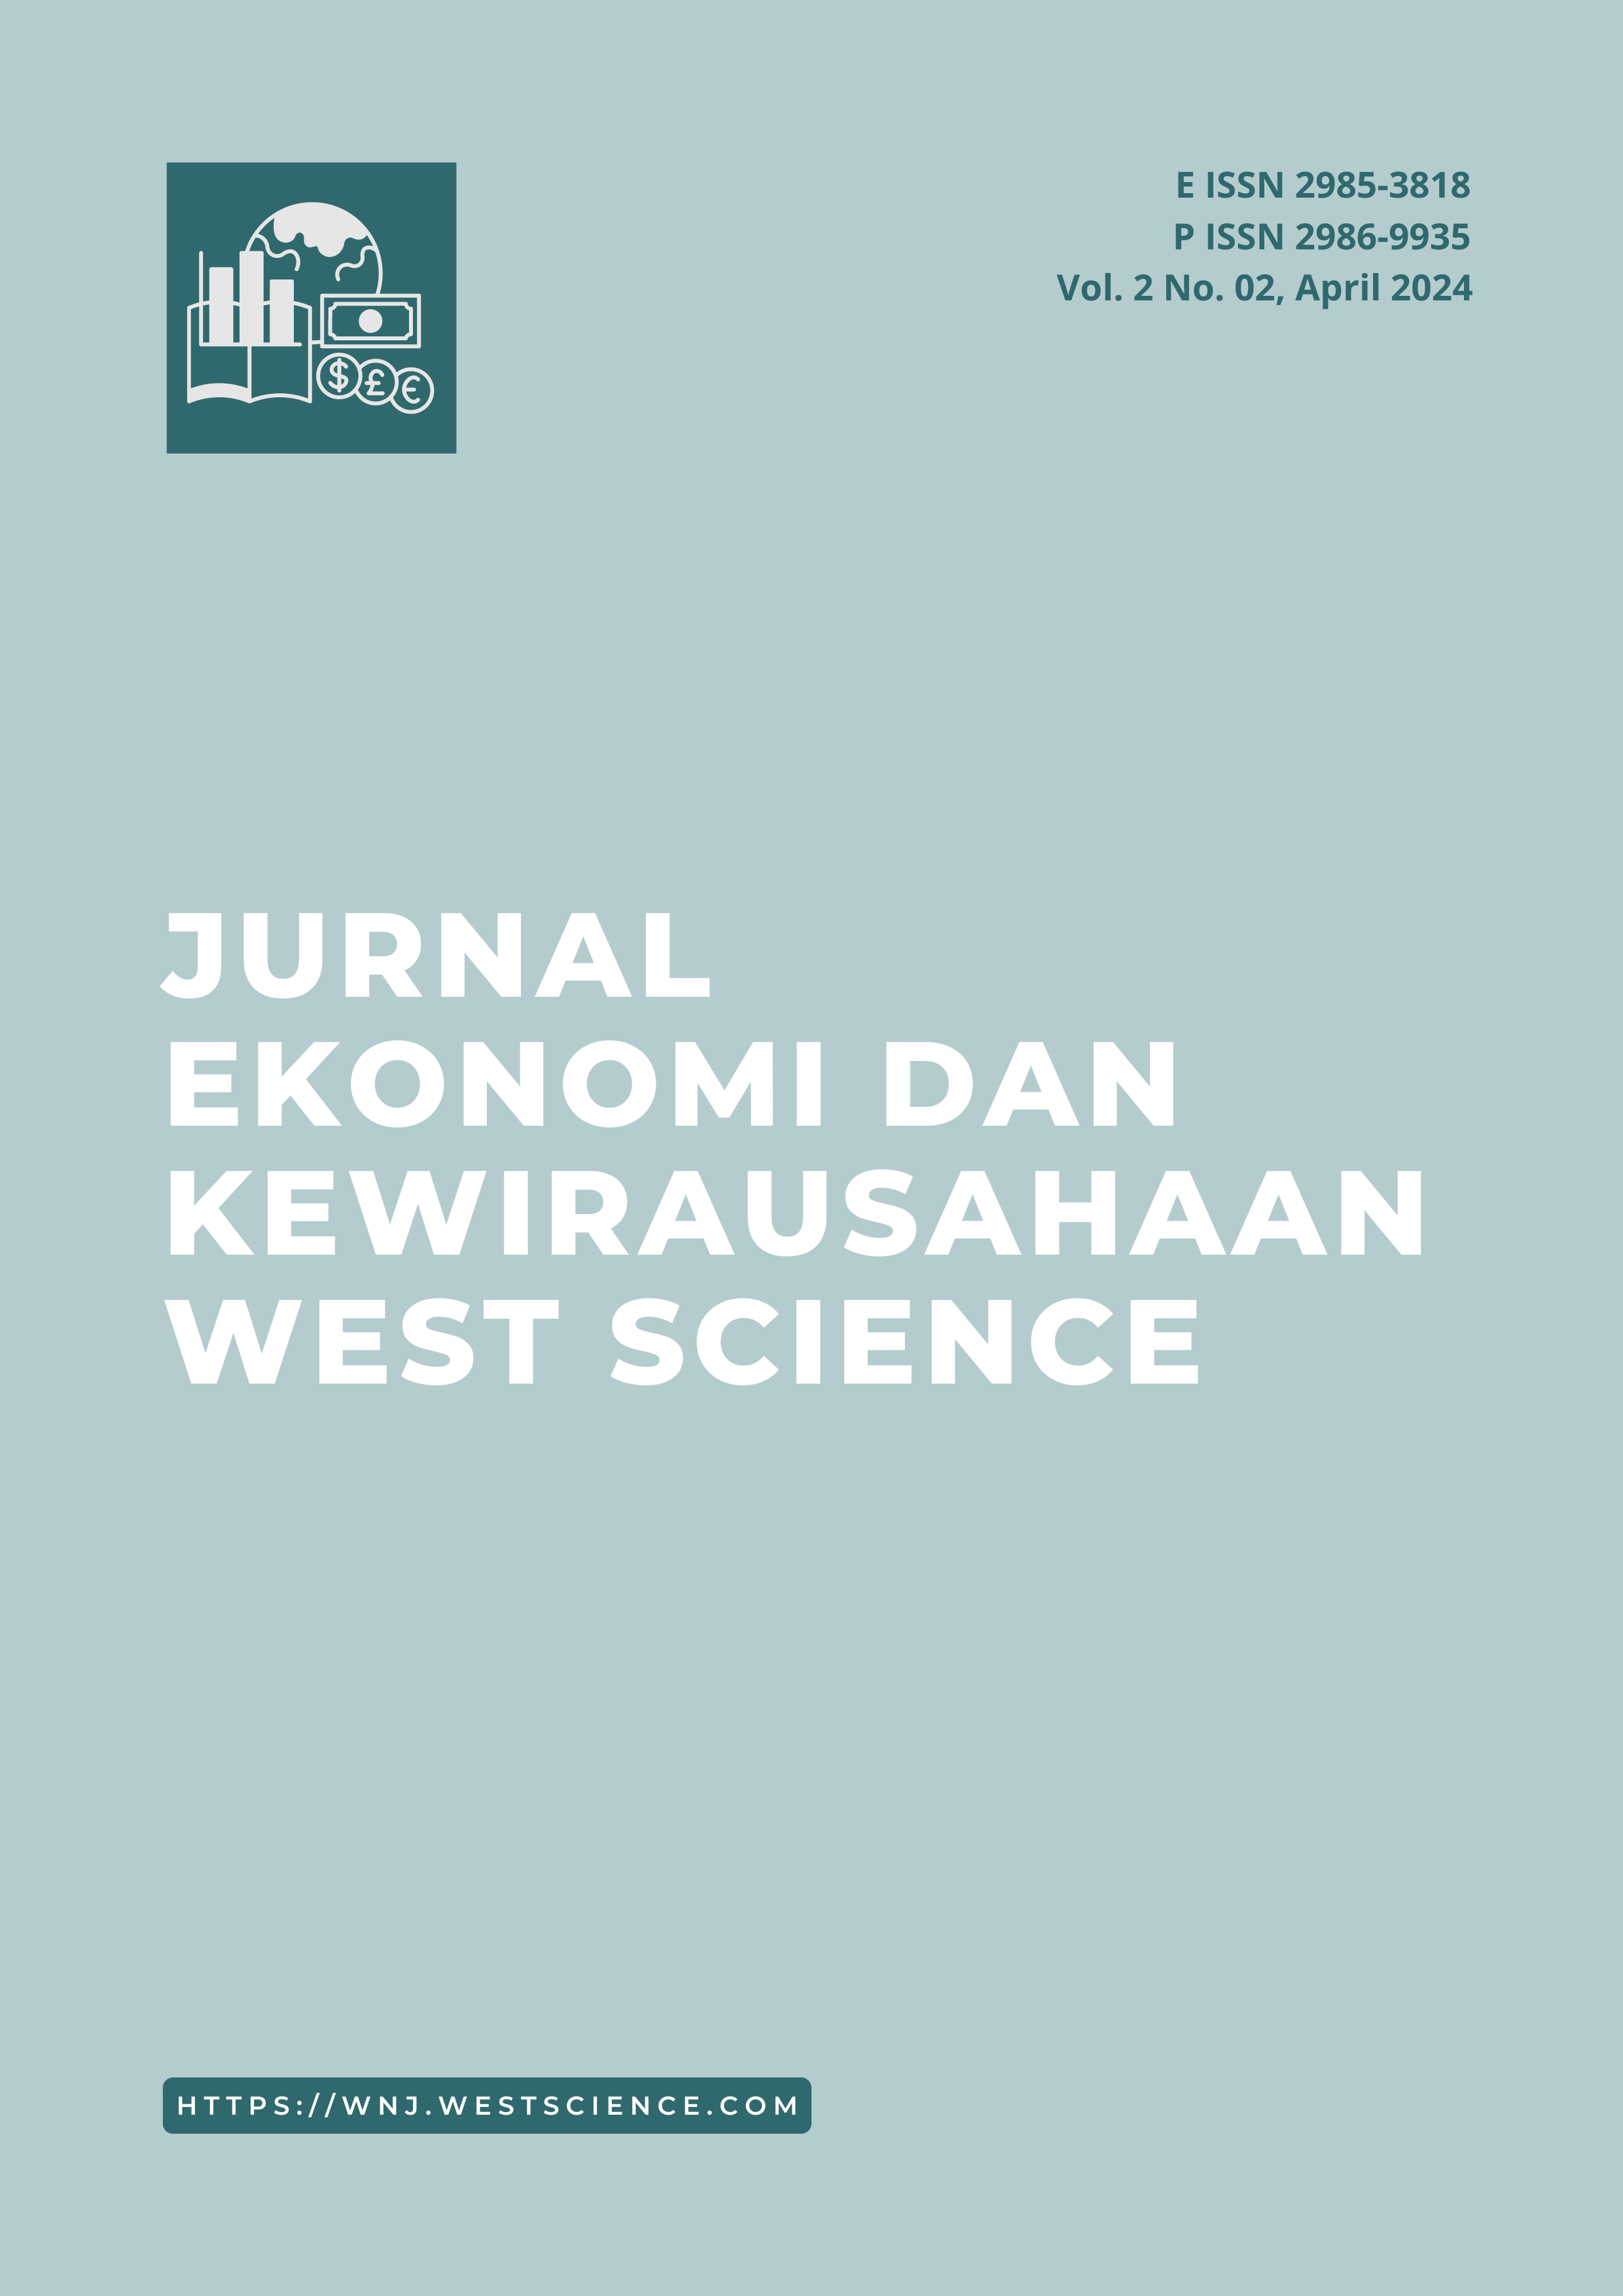 					Lihat Vol 2 No 02 (2024): Jurnal Ekonomi dan Kewirausahaan West Science
				